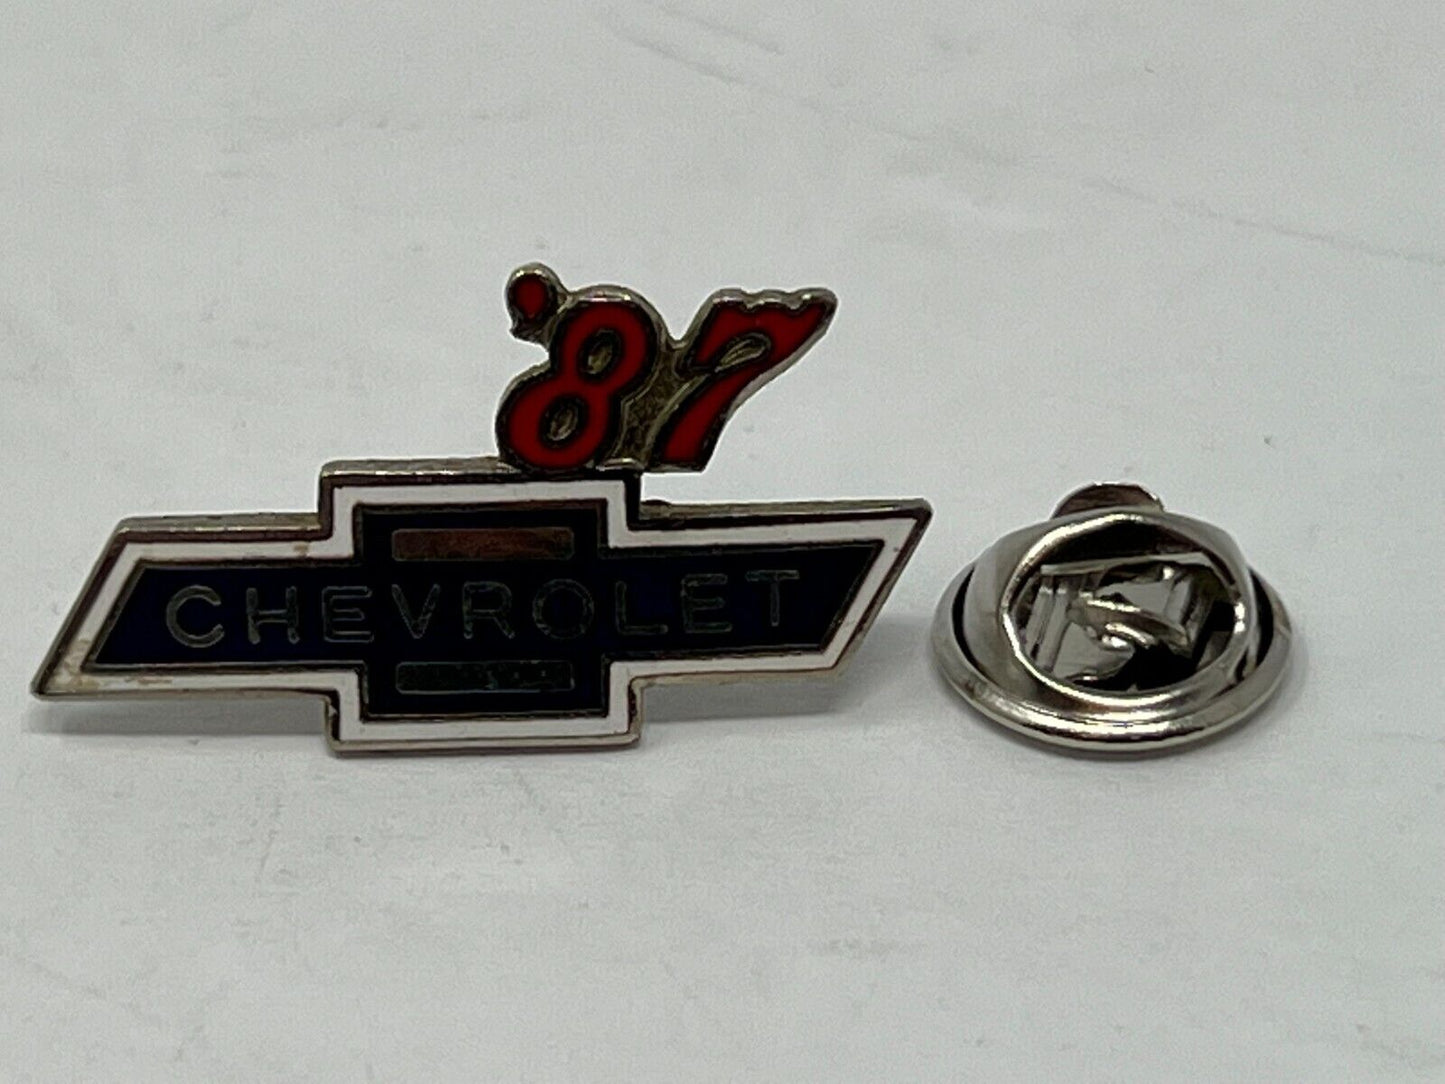 87 Chevrolet Automotive Lapel Pin